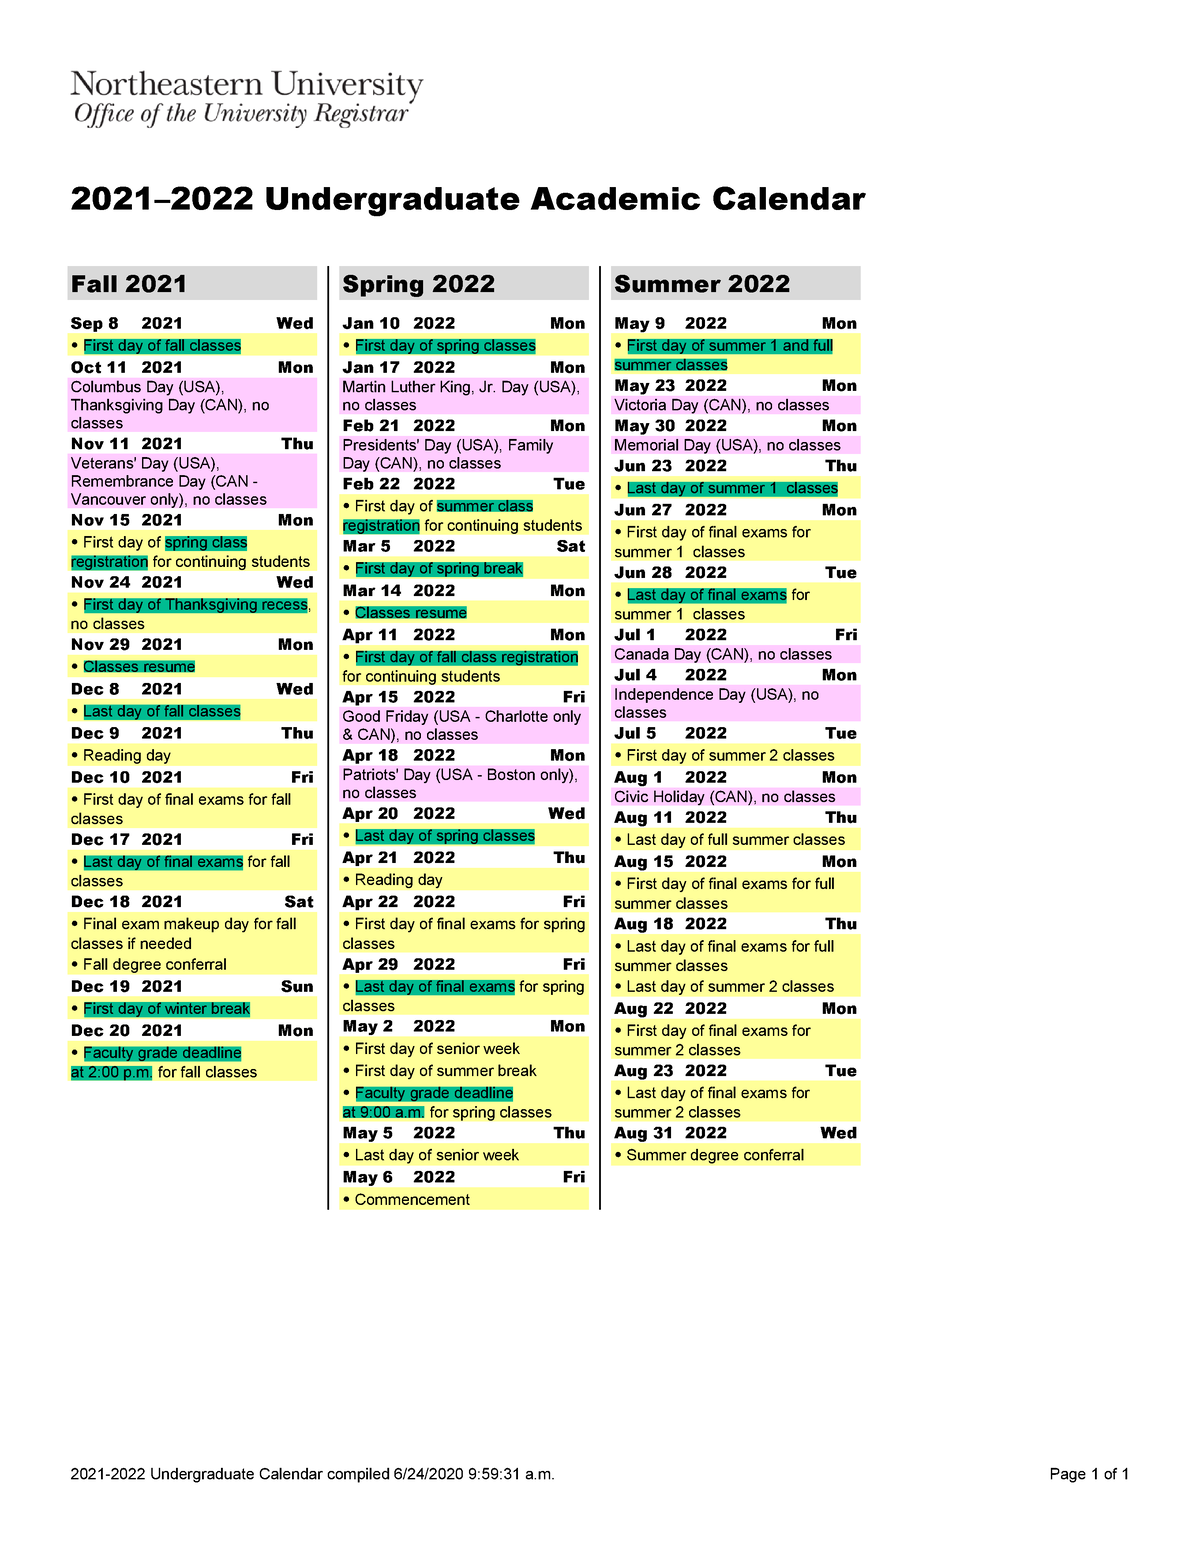 Emory Academic Calendar Fall 2022 2021-2022 Northeastern Calendar - 2021 -2022 Undergraduate Calendar  Compiled 6/24/2020 9:59:31 A. - Studocu